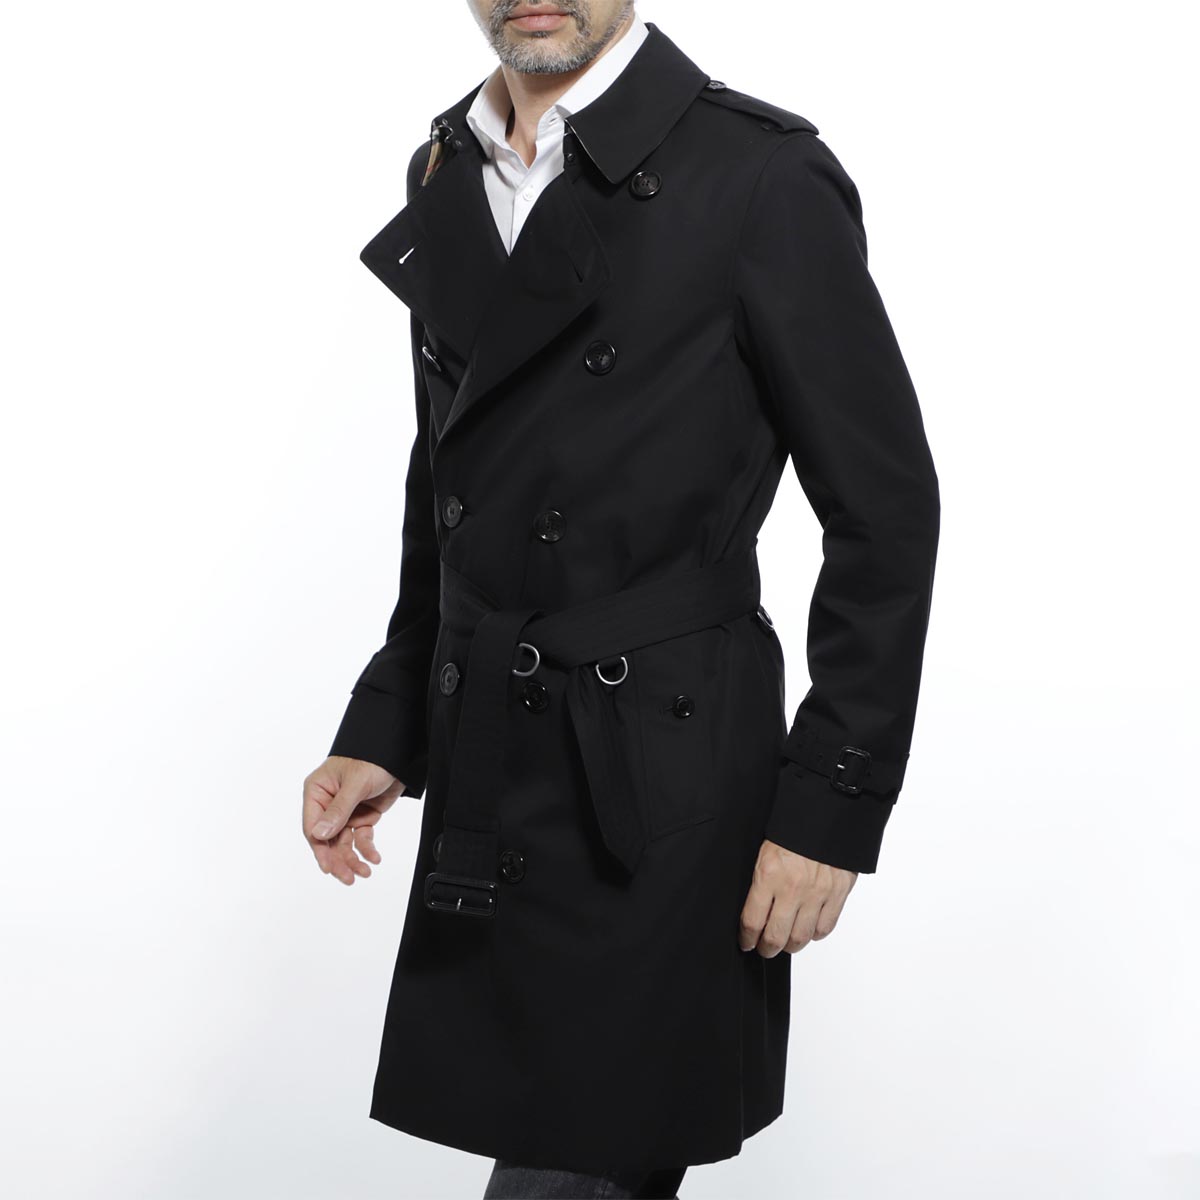 burberry trench coat mens black